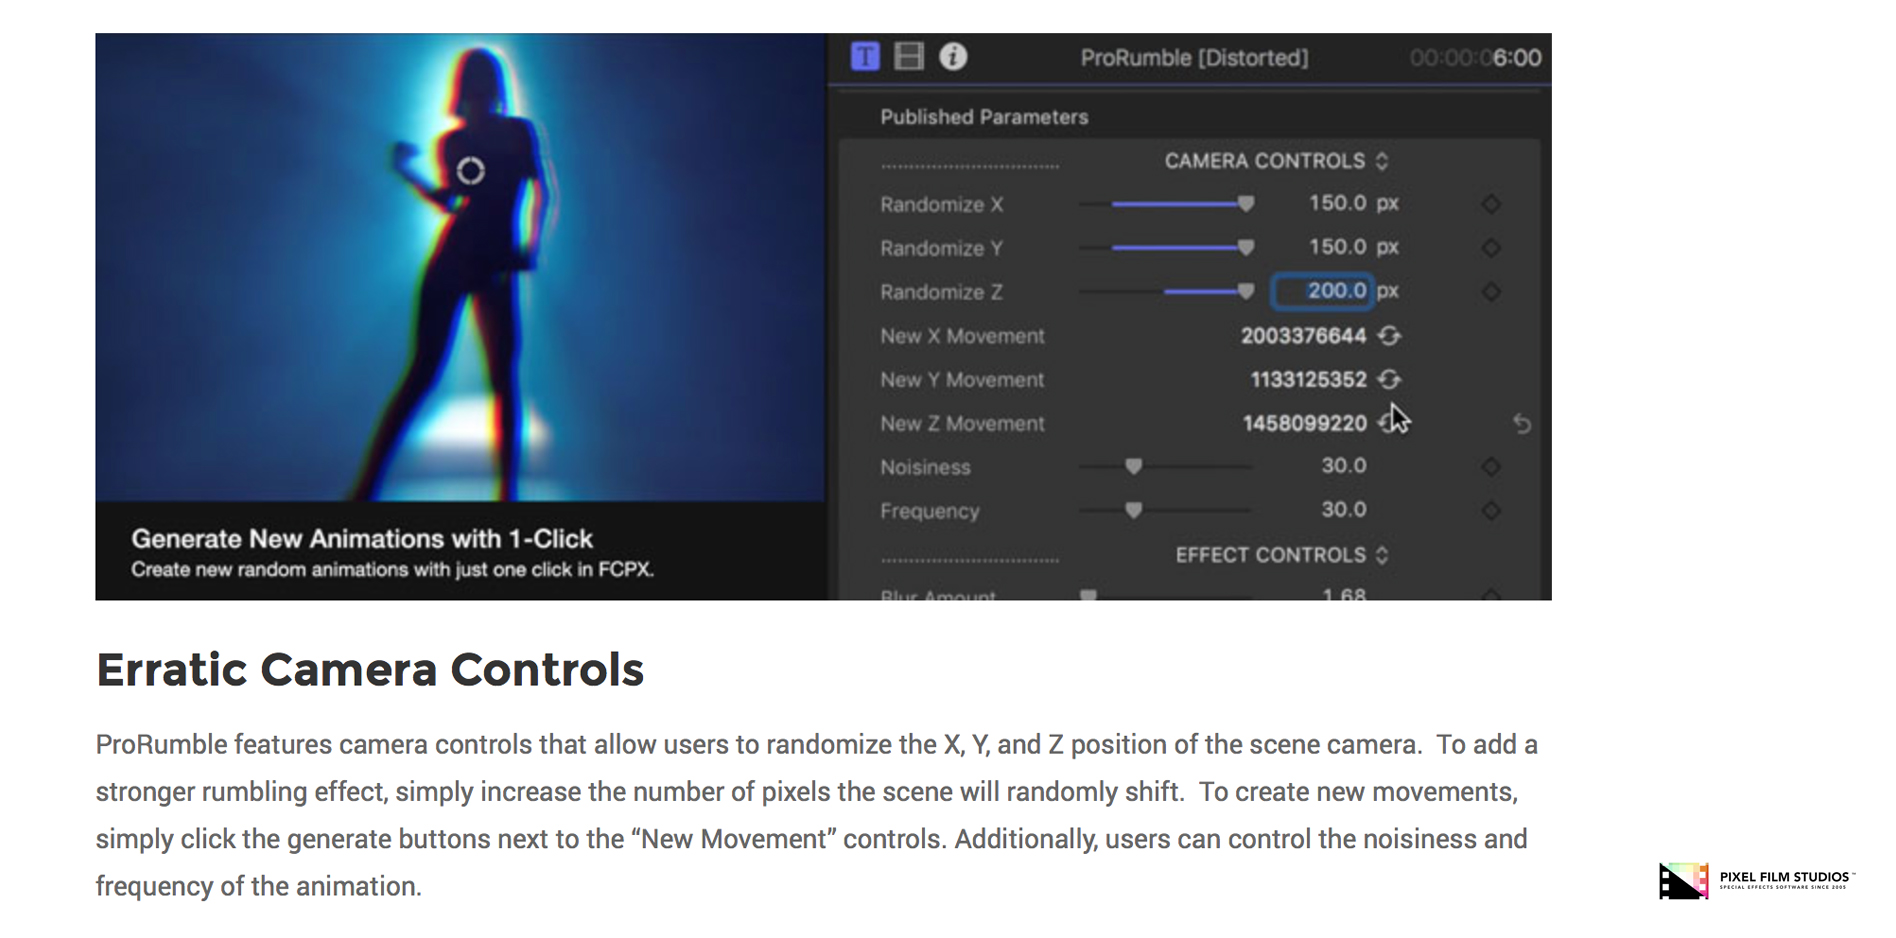 Pixel Film Studios - ProRumble - Final Cut Pro X Plugin